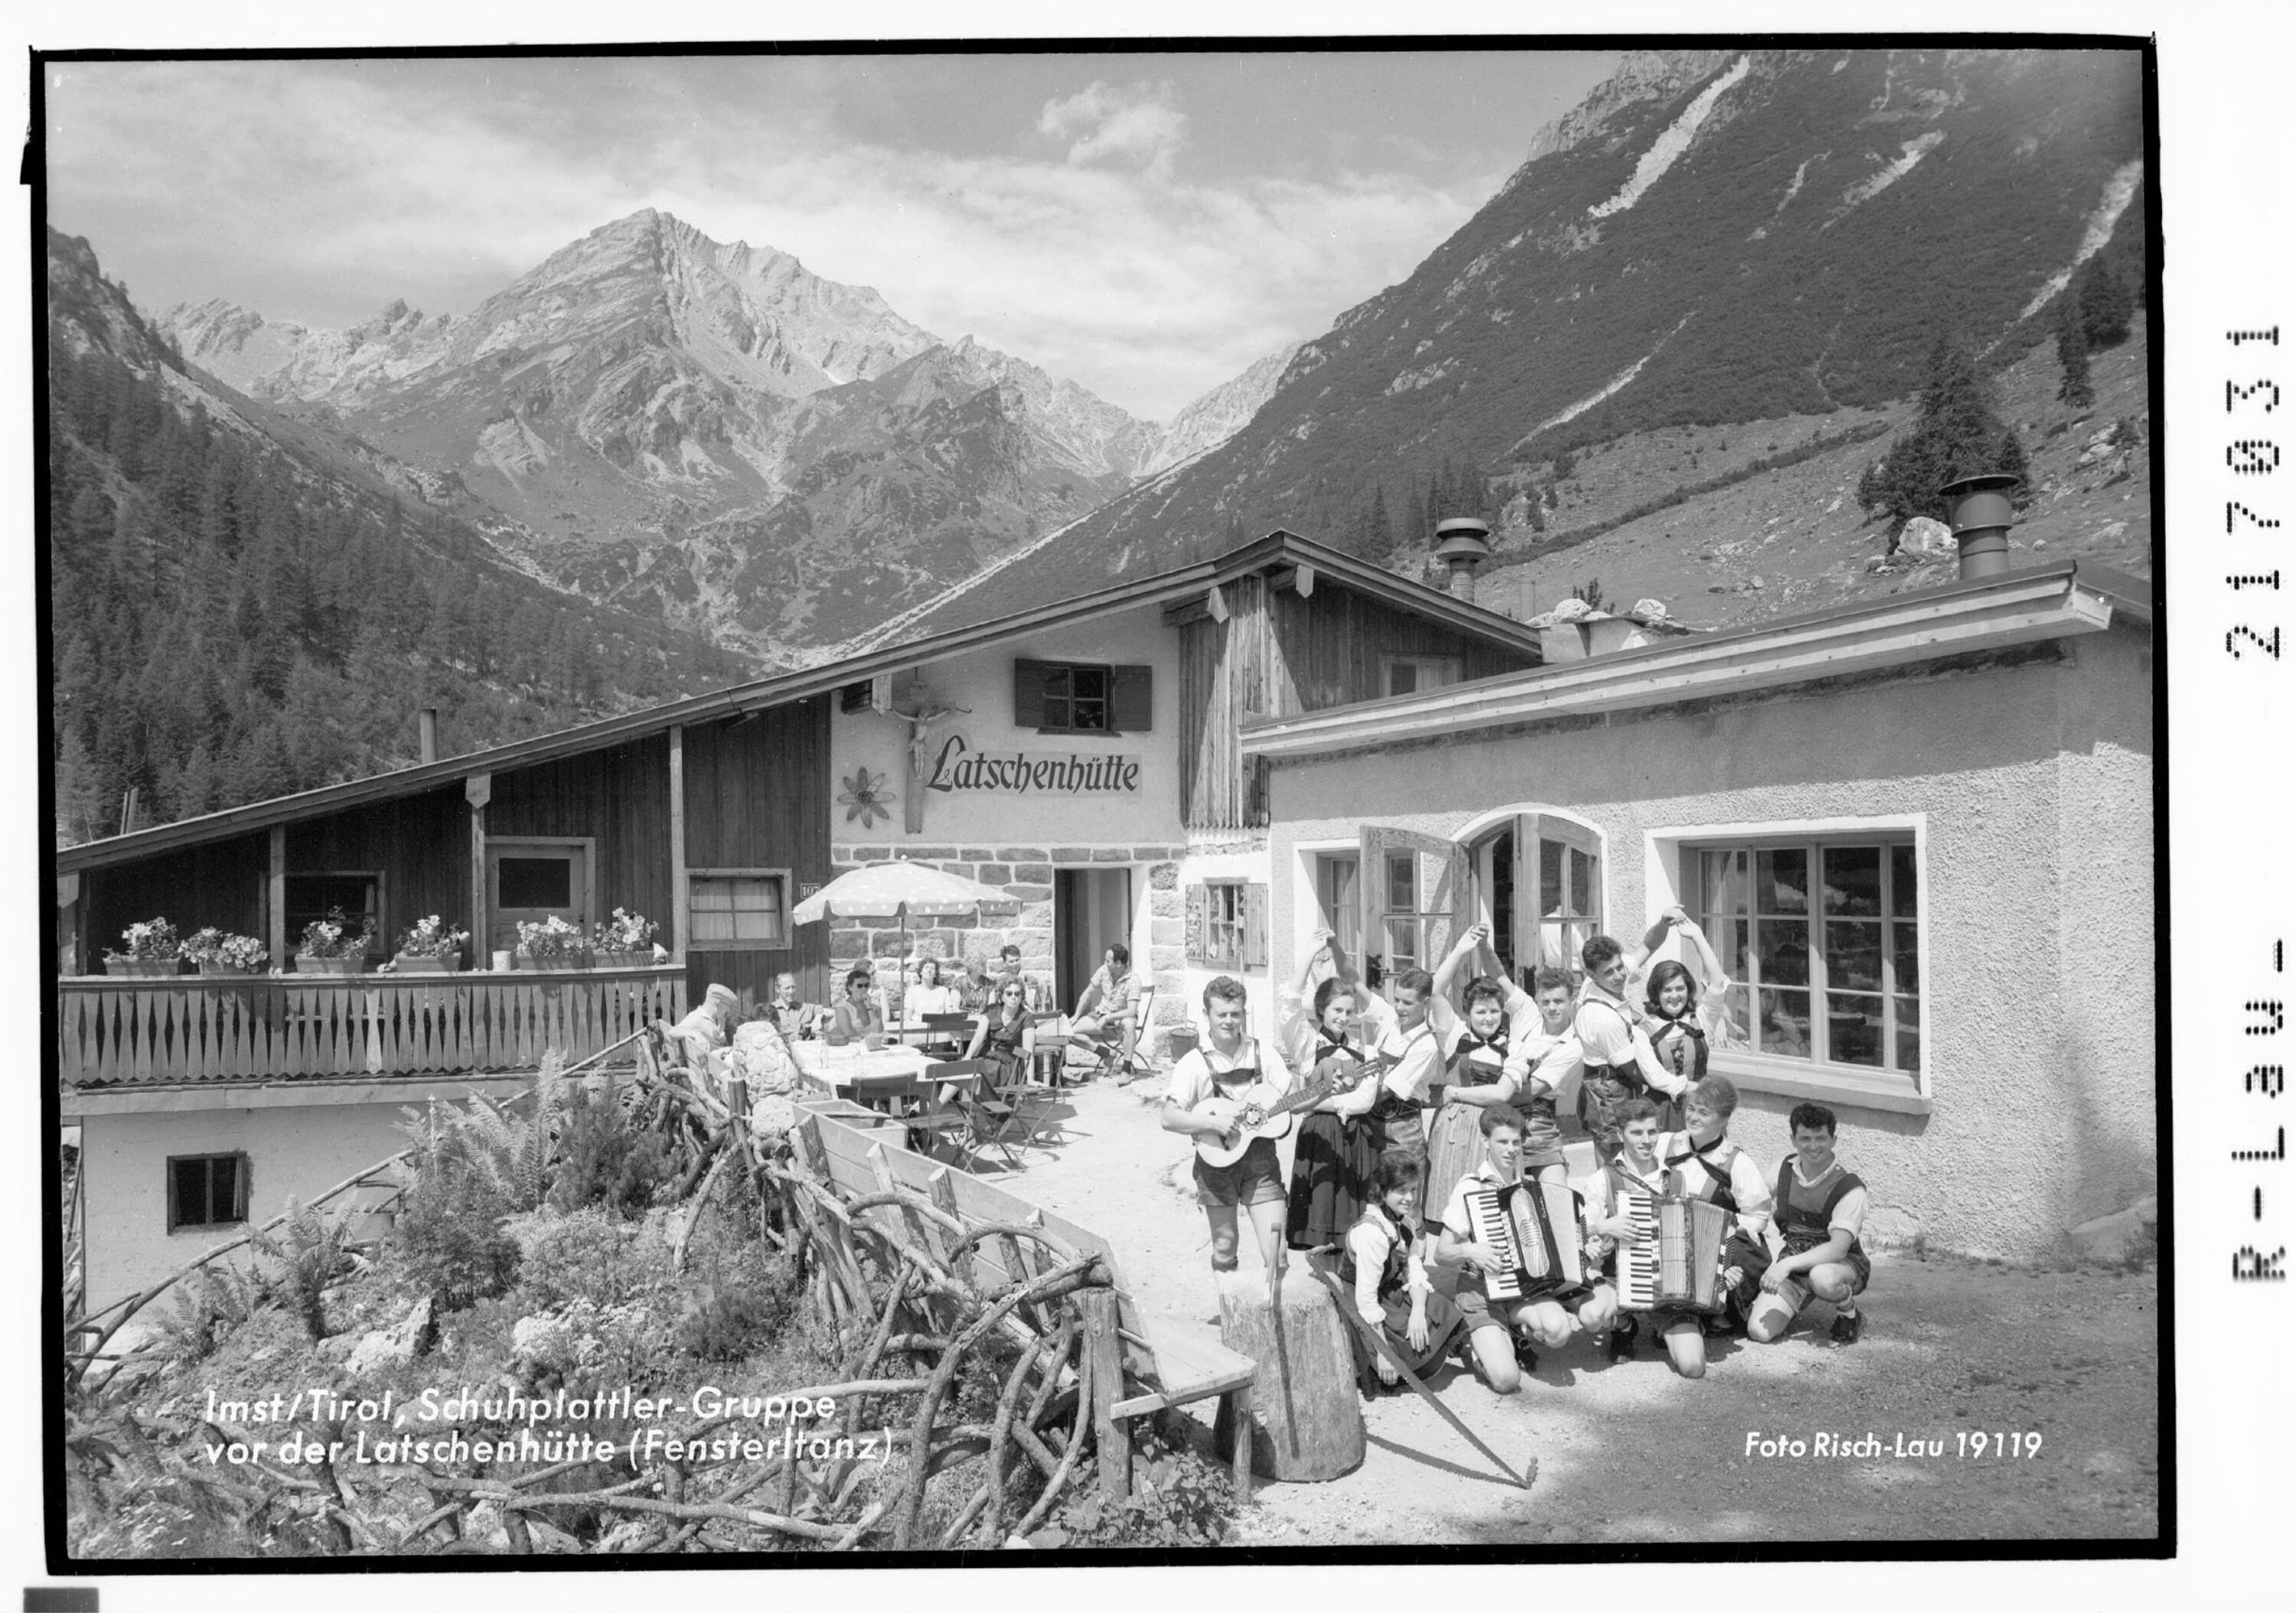 Imst / Tirol, Schuhplattler - Gruppe vor der Latschenhütte></div>


    <hr>
    <div class=